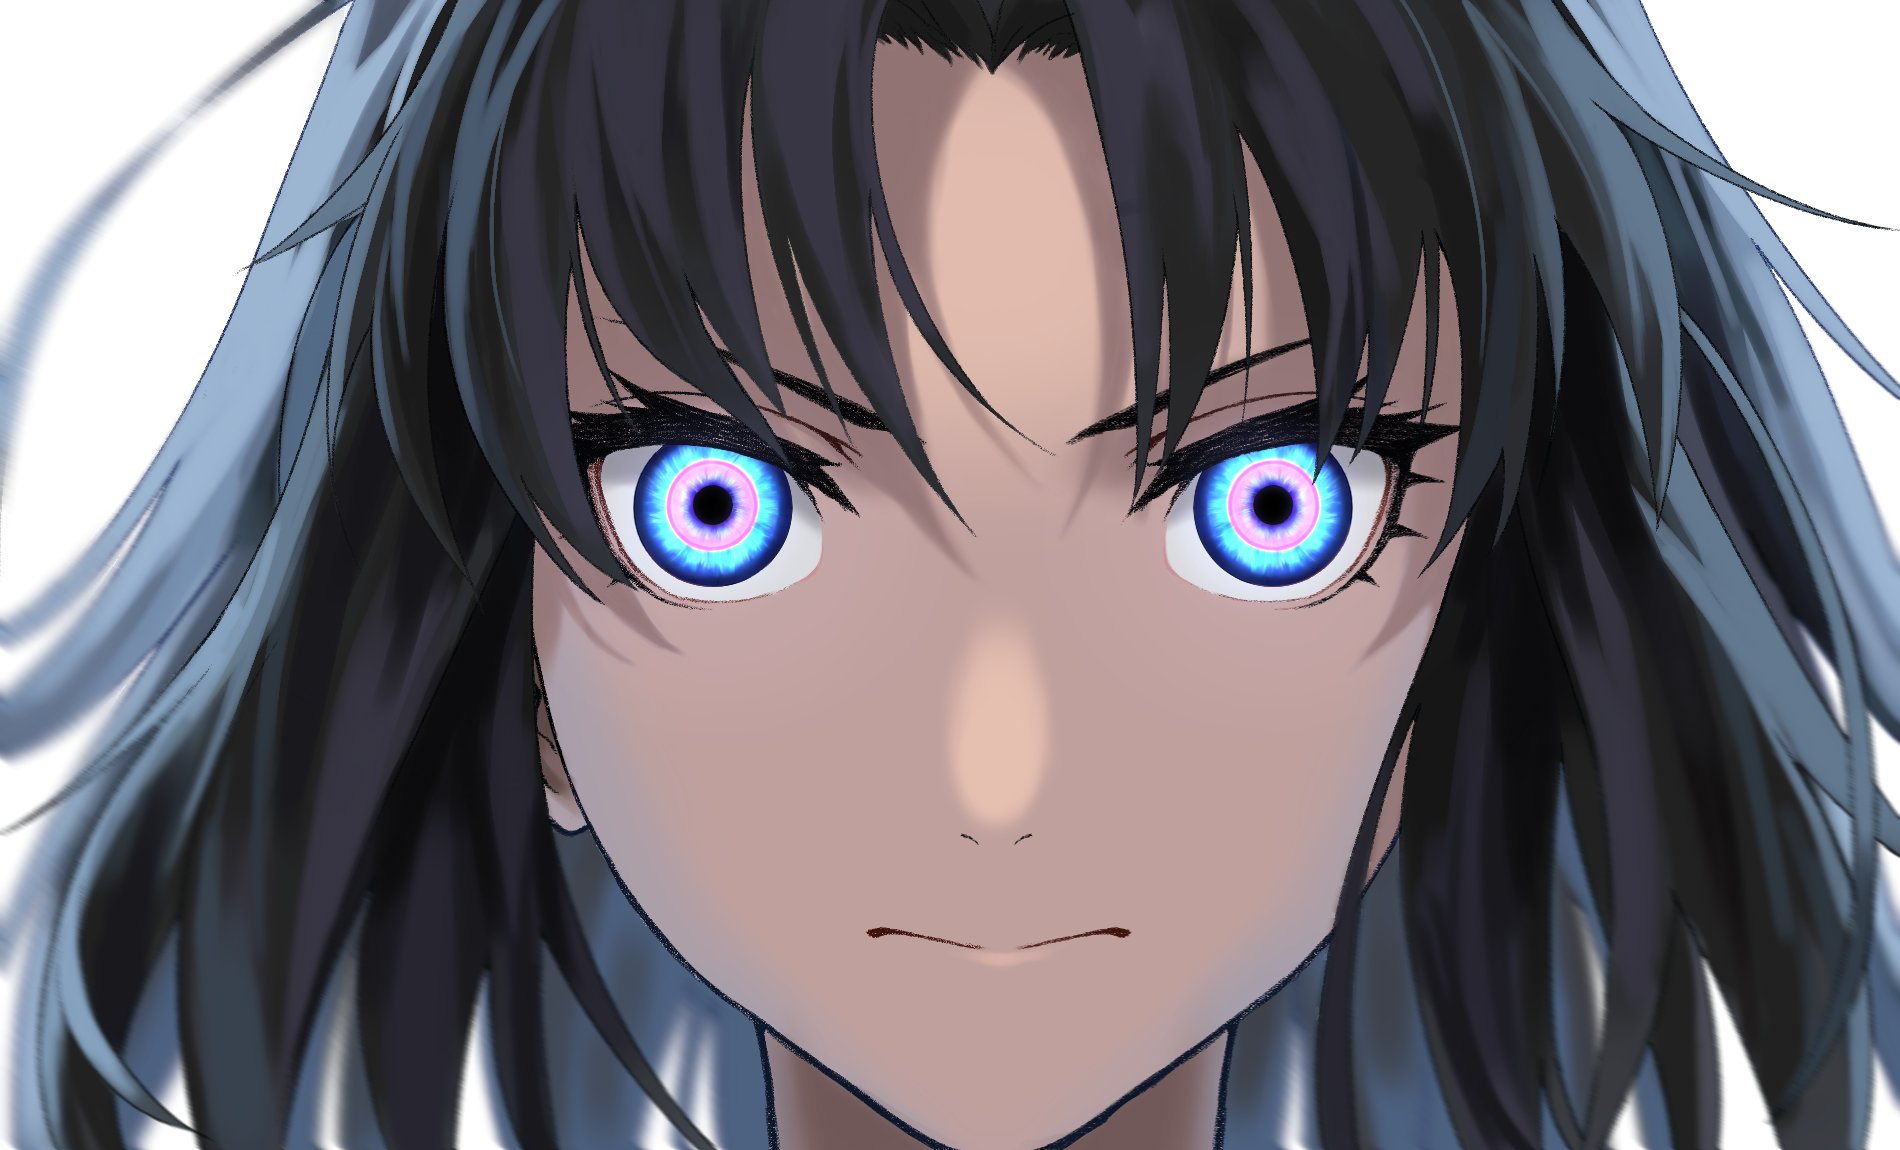 Anime 1900x1150 Kara no Kyoukai Ryougi Shiki anime girls anime black hair blue eyes mystic eyes